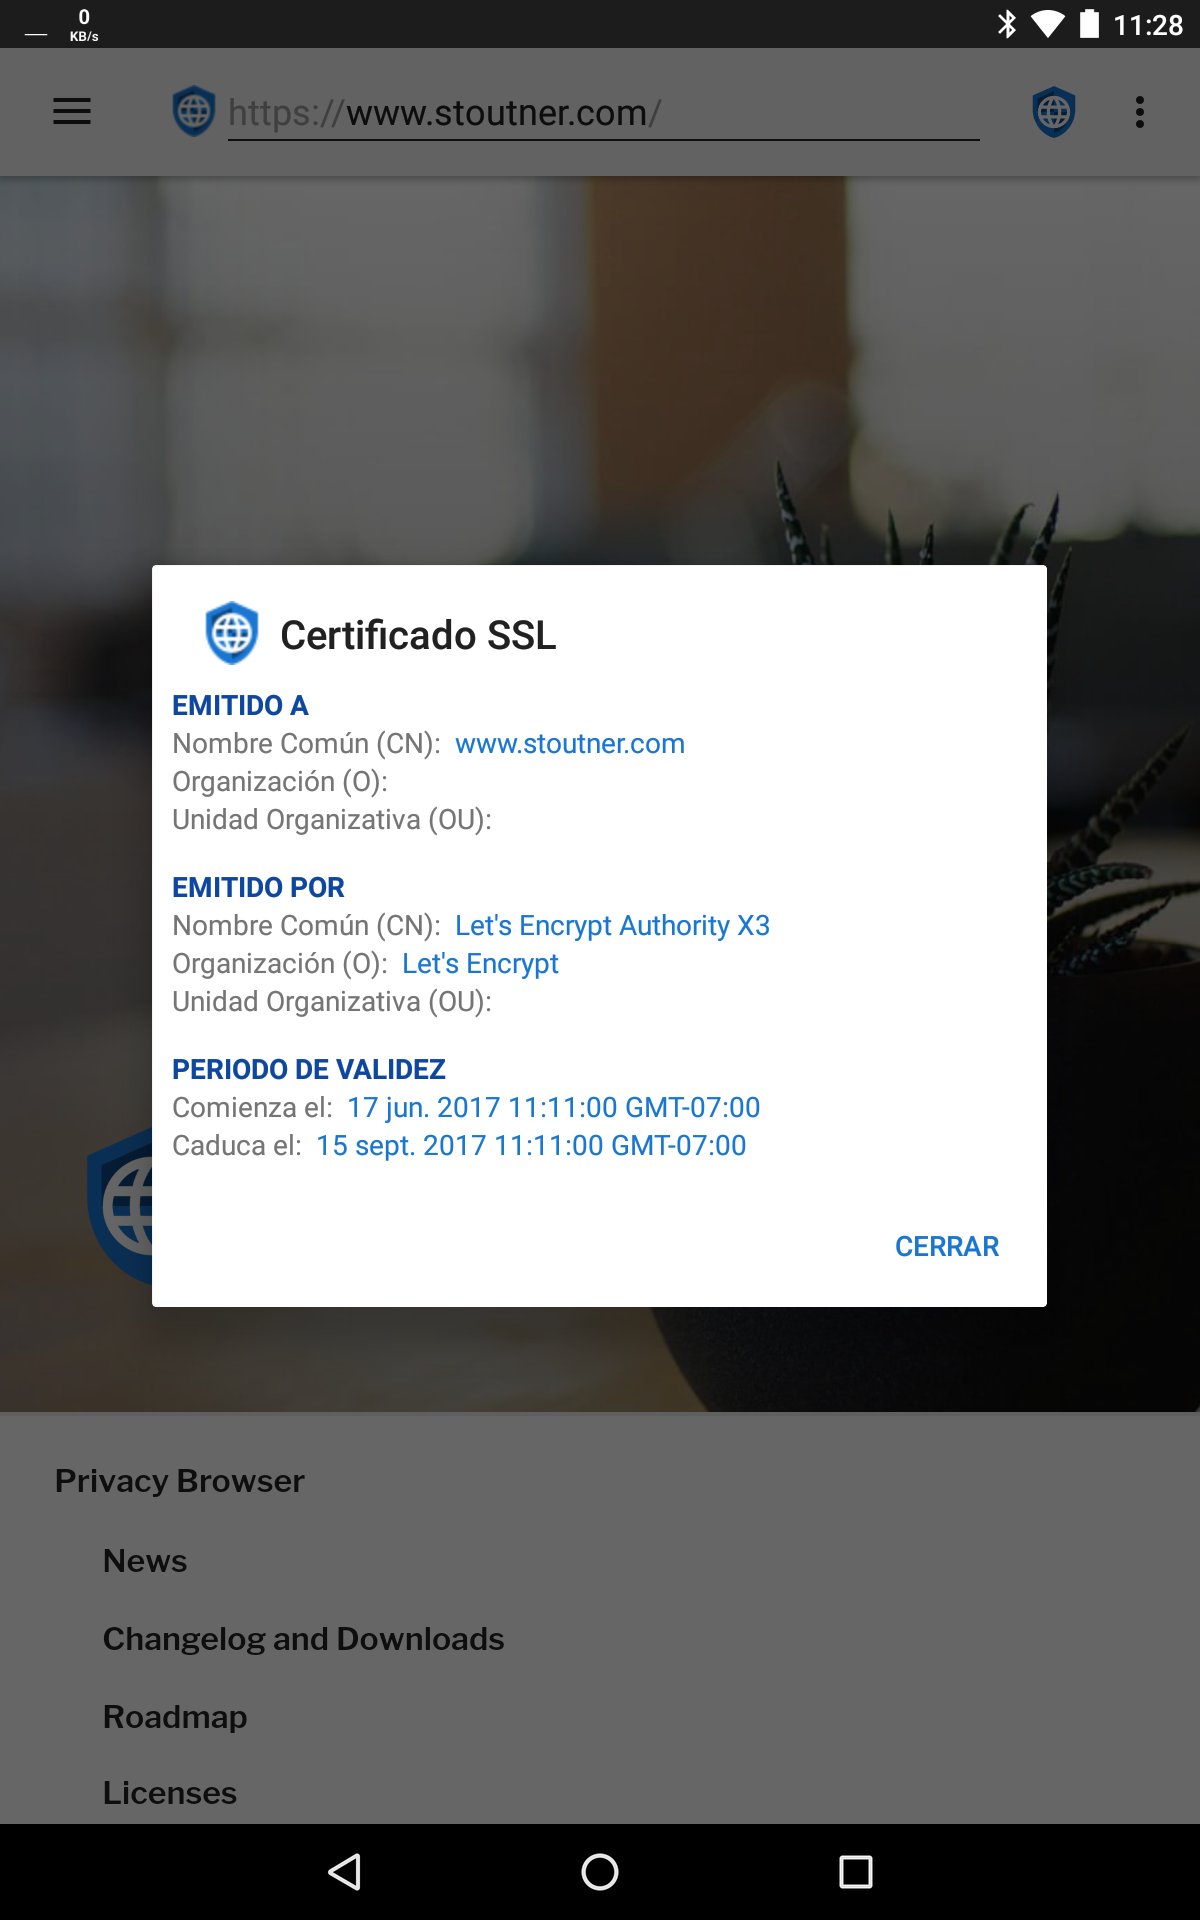 01 - View SSL Certificate - es.png